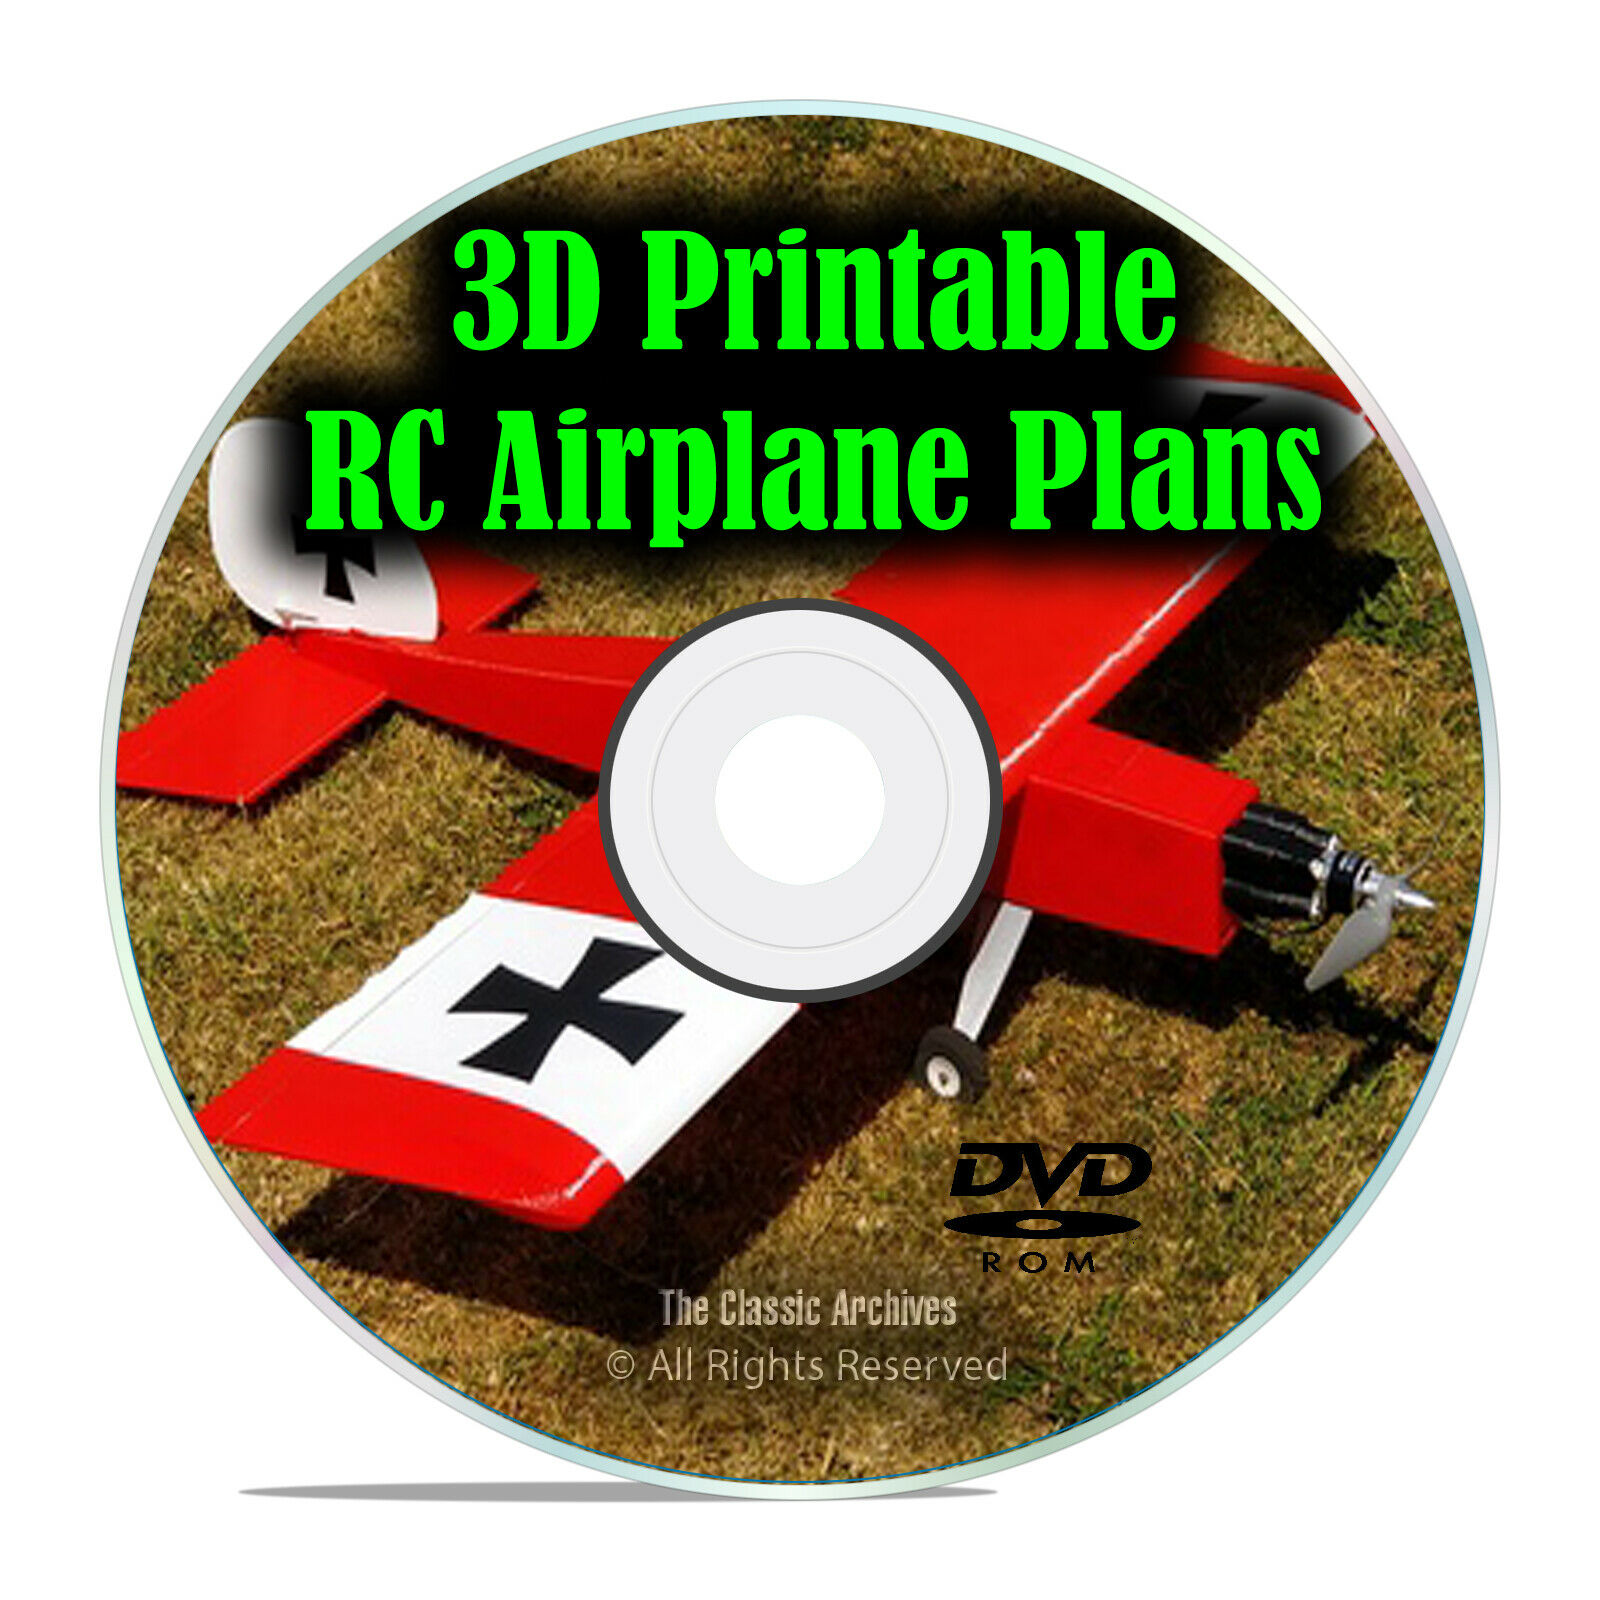 25 3D PRINTABLE Remote Control RC Radio Model Airplane Plans .STL files, DVD I21